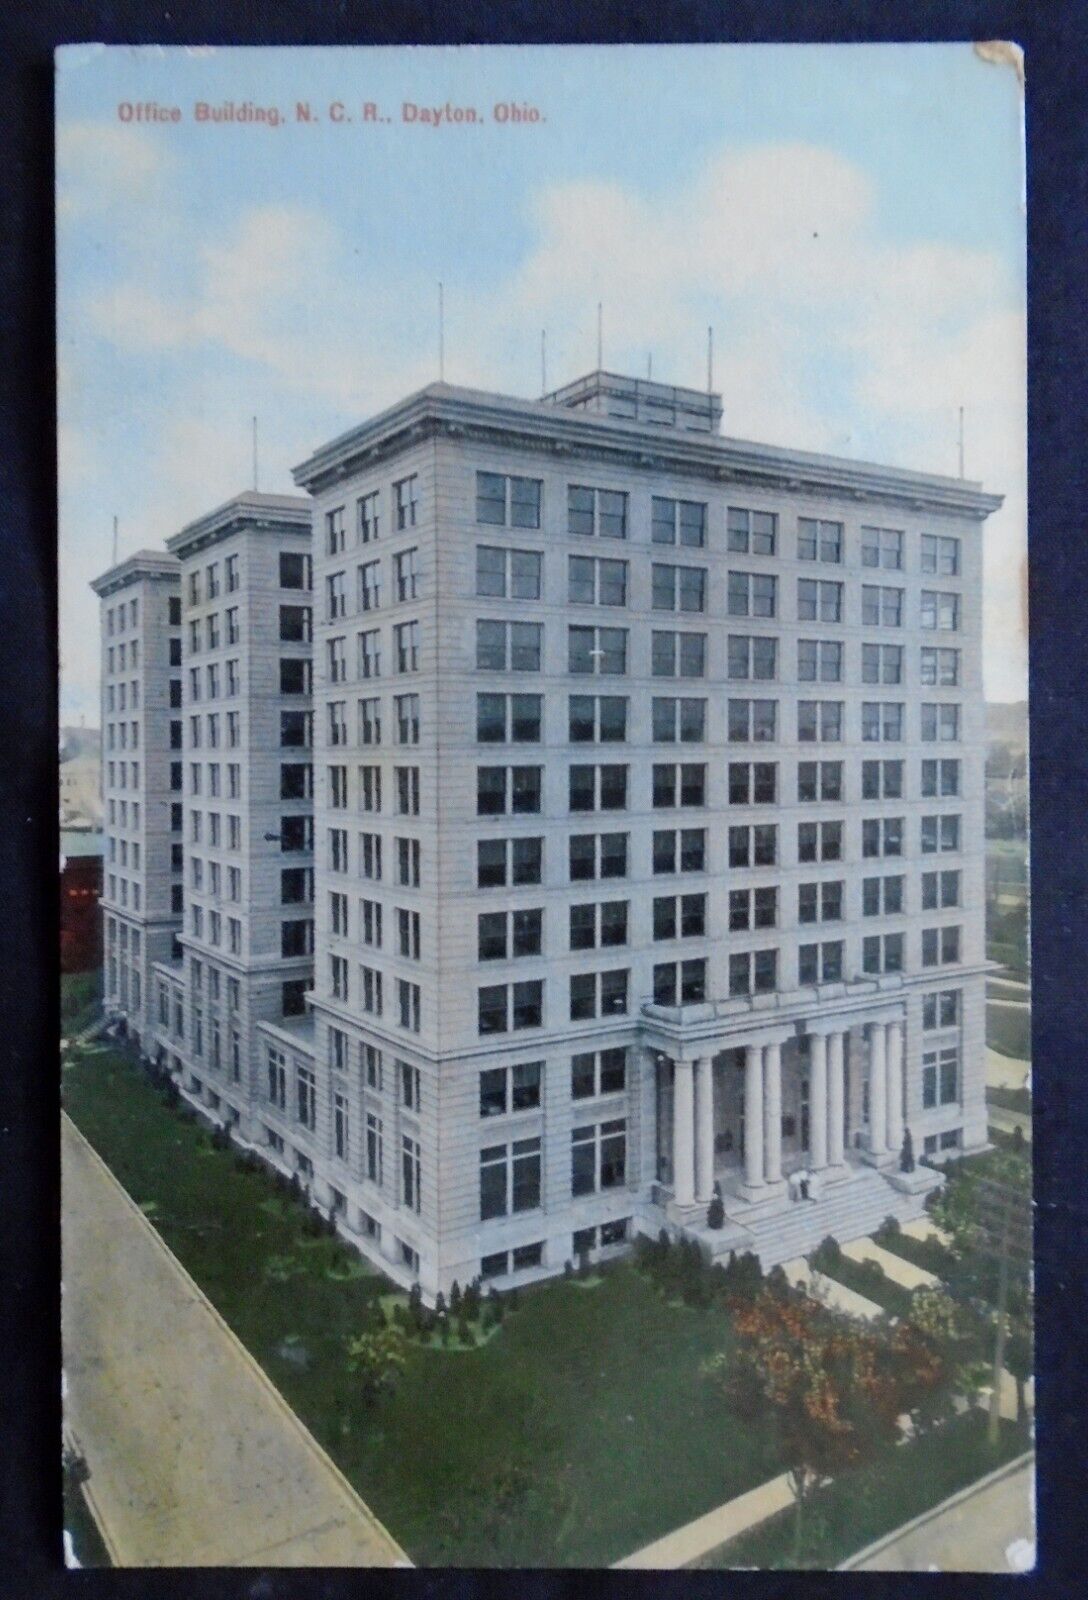 Dayton, OH, Office Building, N.C.R., postmarked 1910